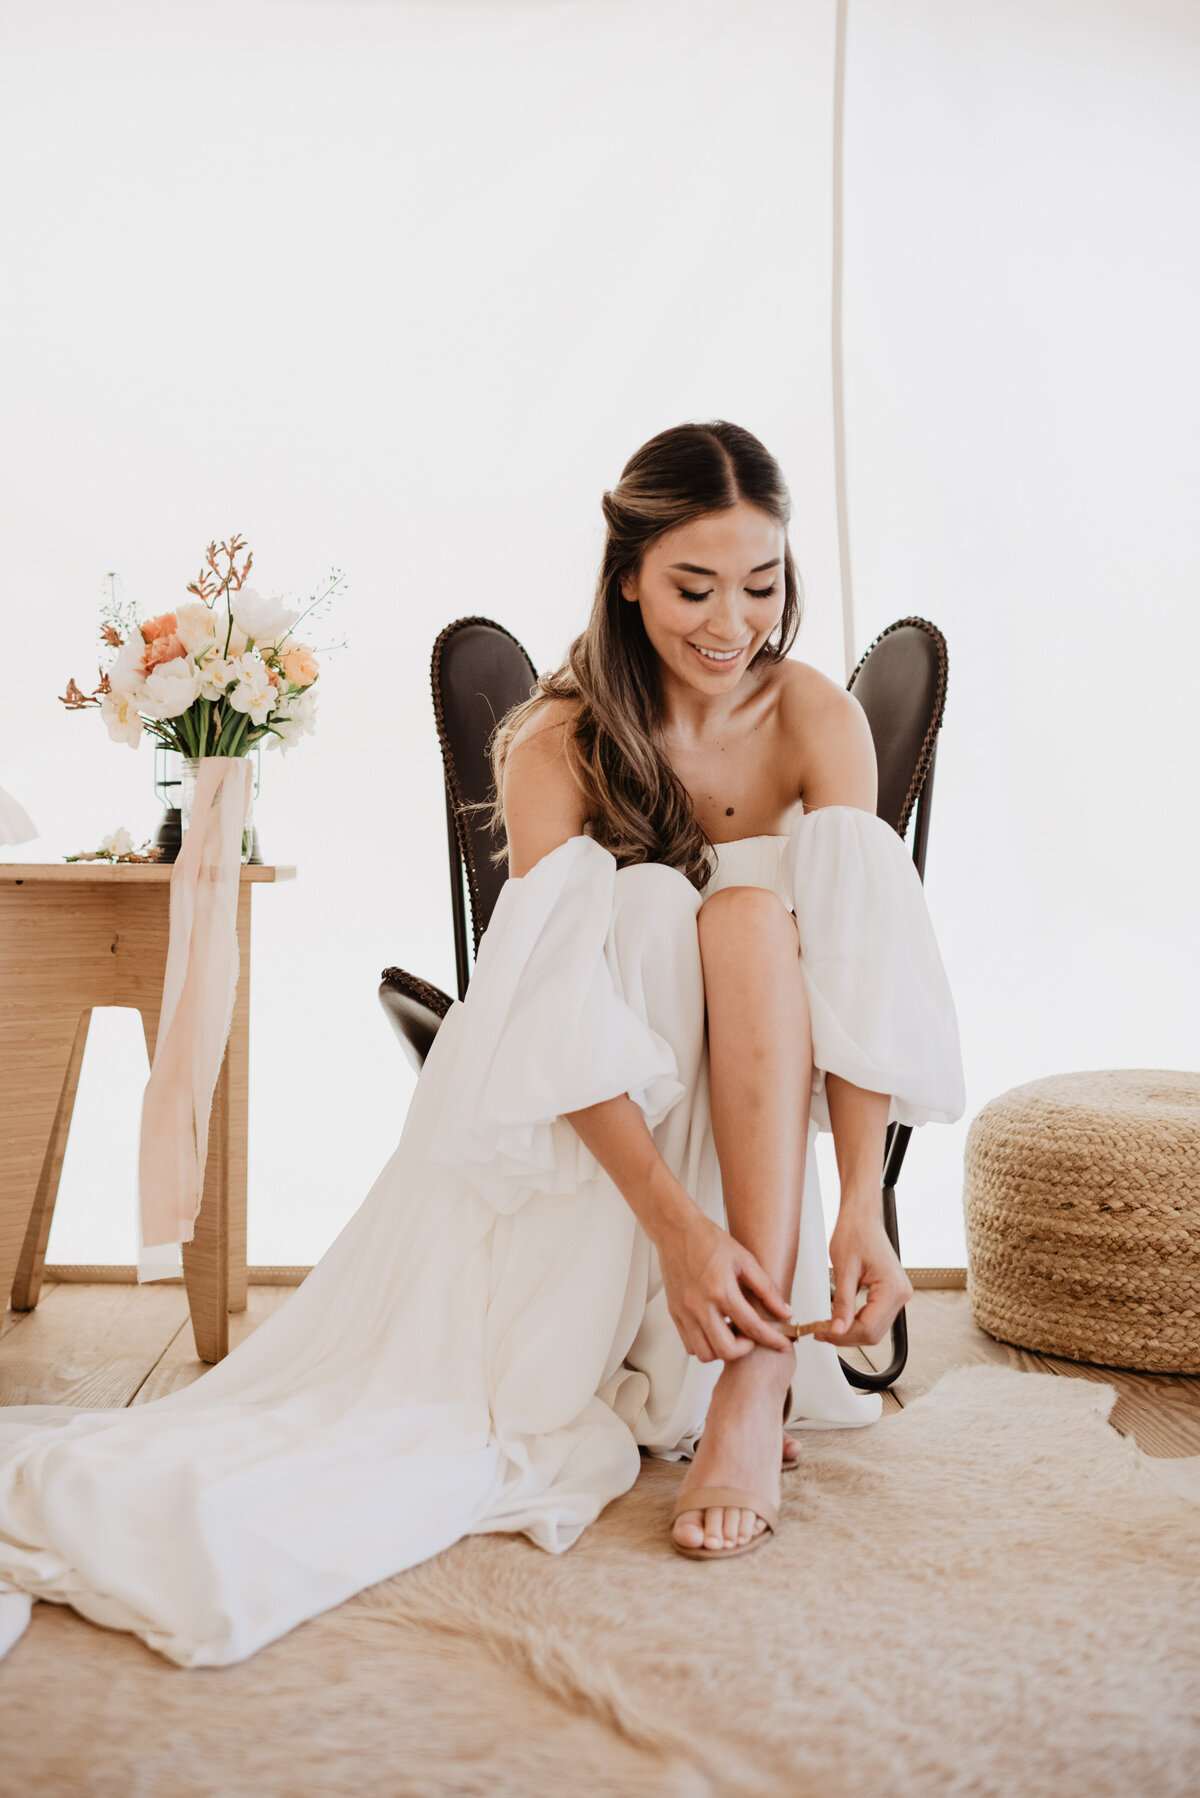 Utah Elopement Photographer captures bride getting shoes on for elopement